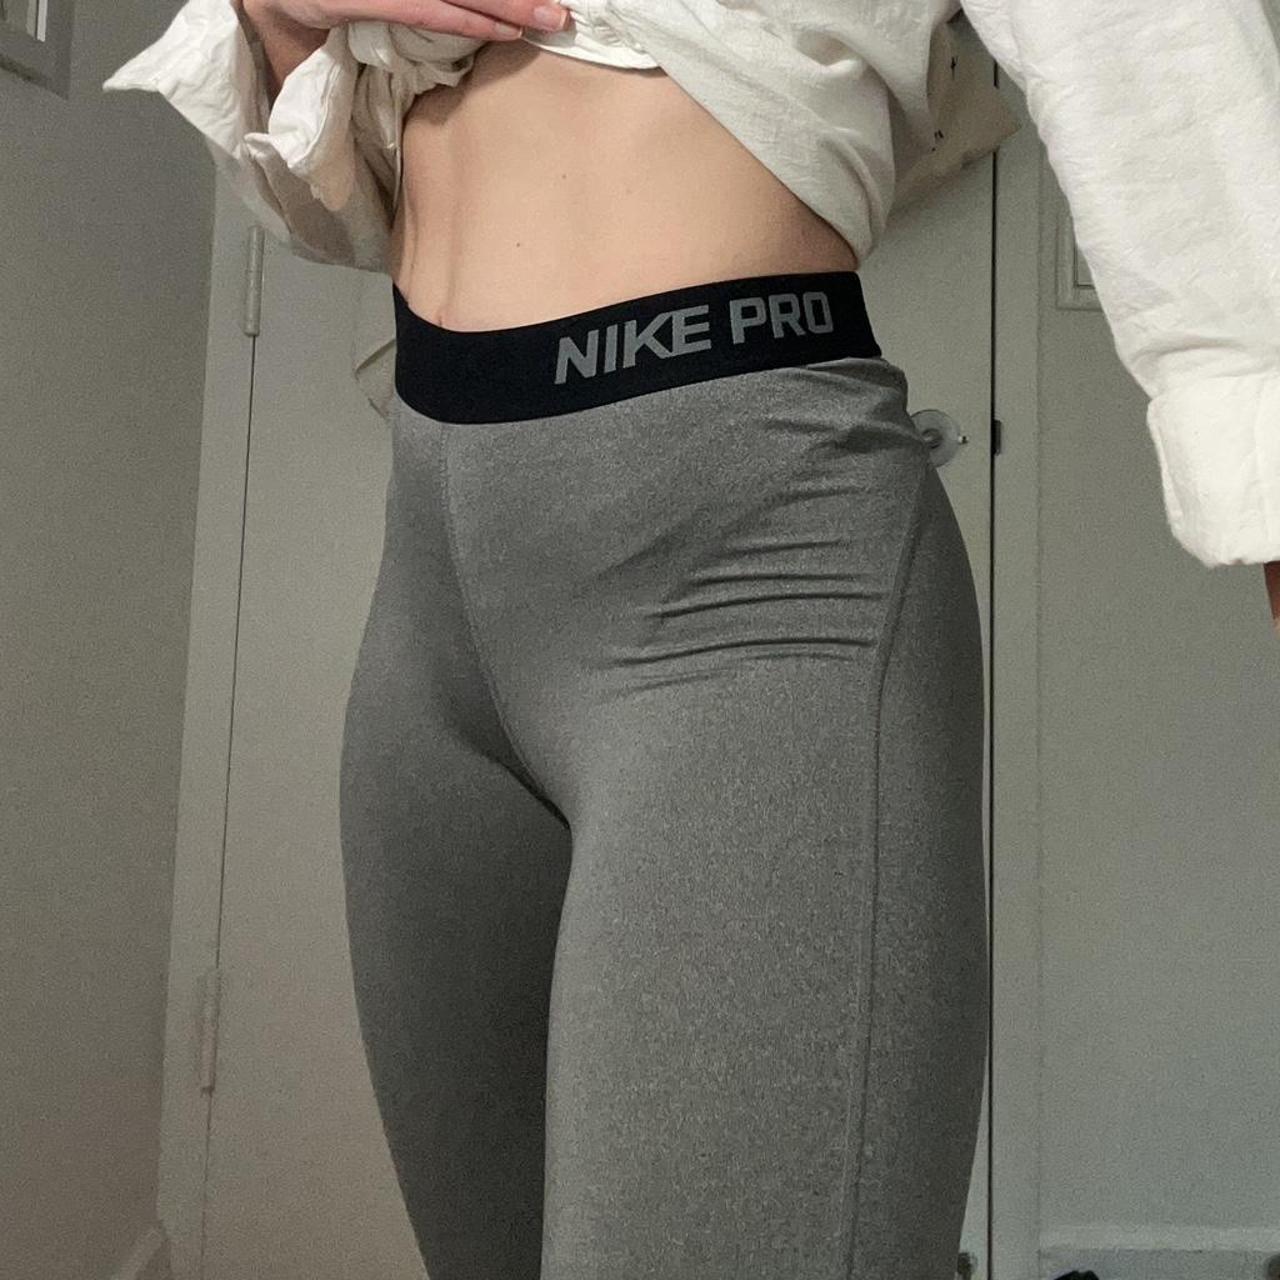 Nike pro leggings #nike #leggings - Depop